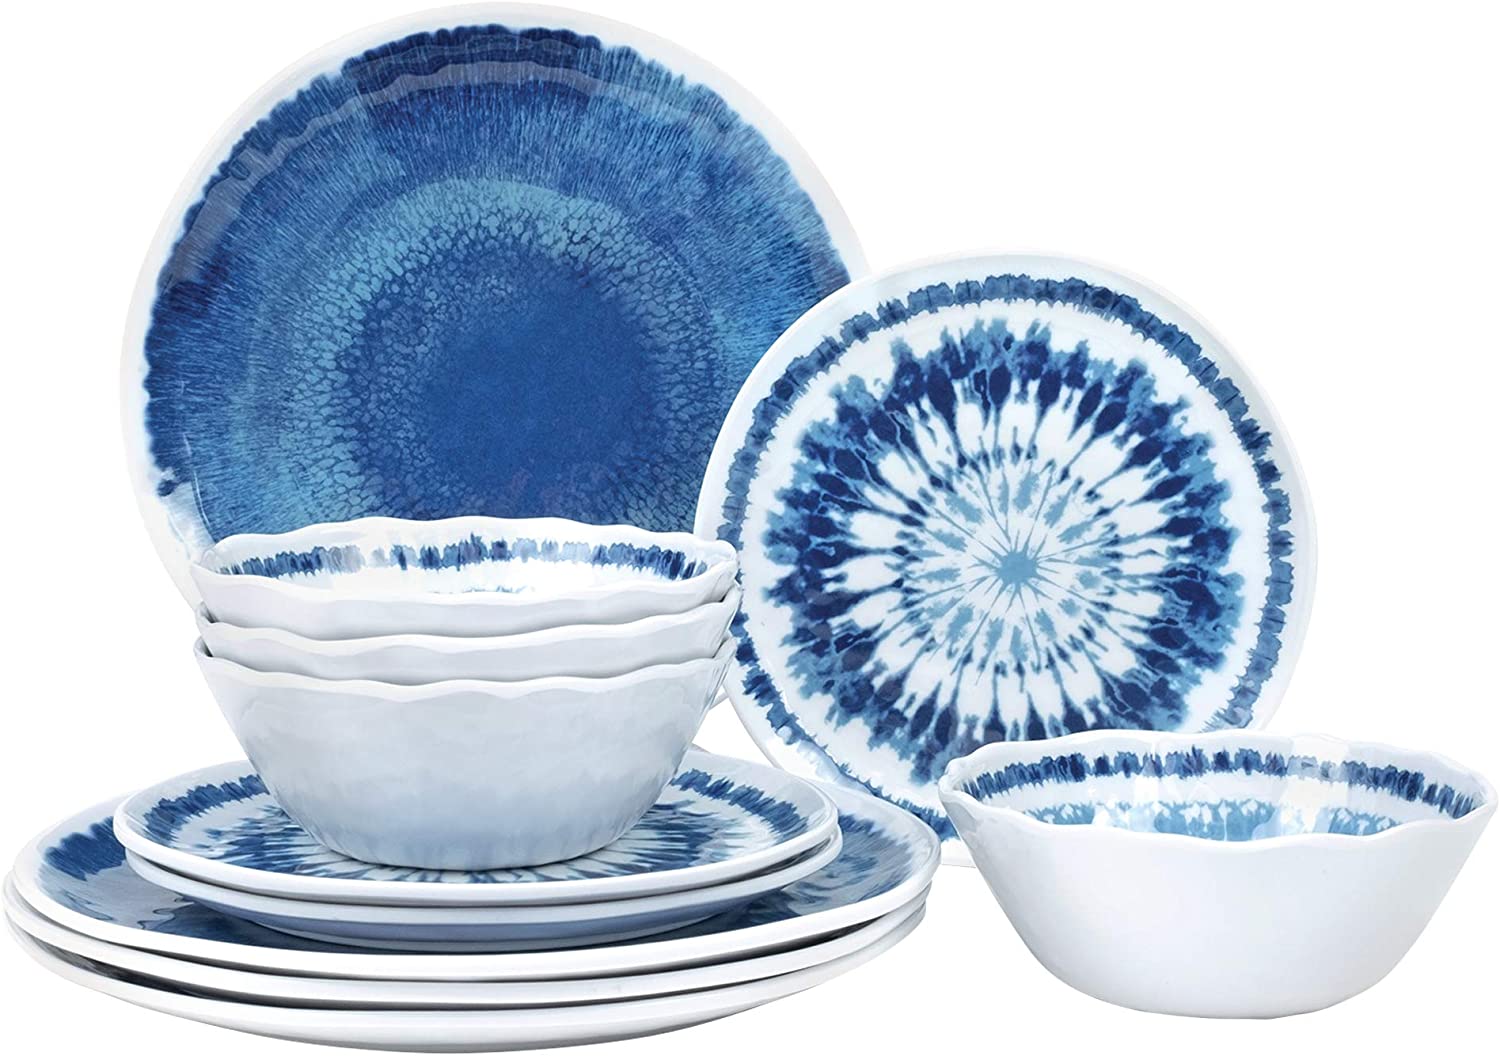 Stylish tableware food grade melamine dinner set camping 12 pieces blue melamine dinnerware sets wholesale